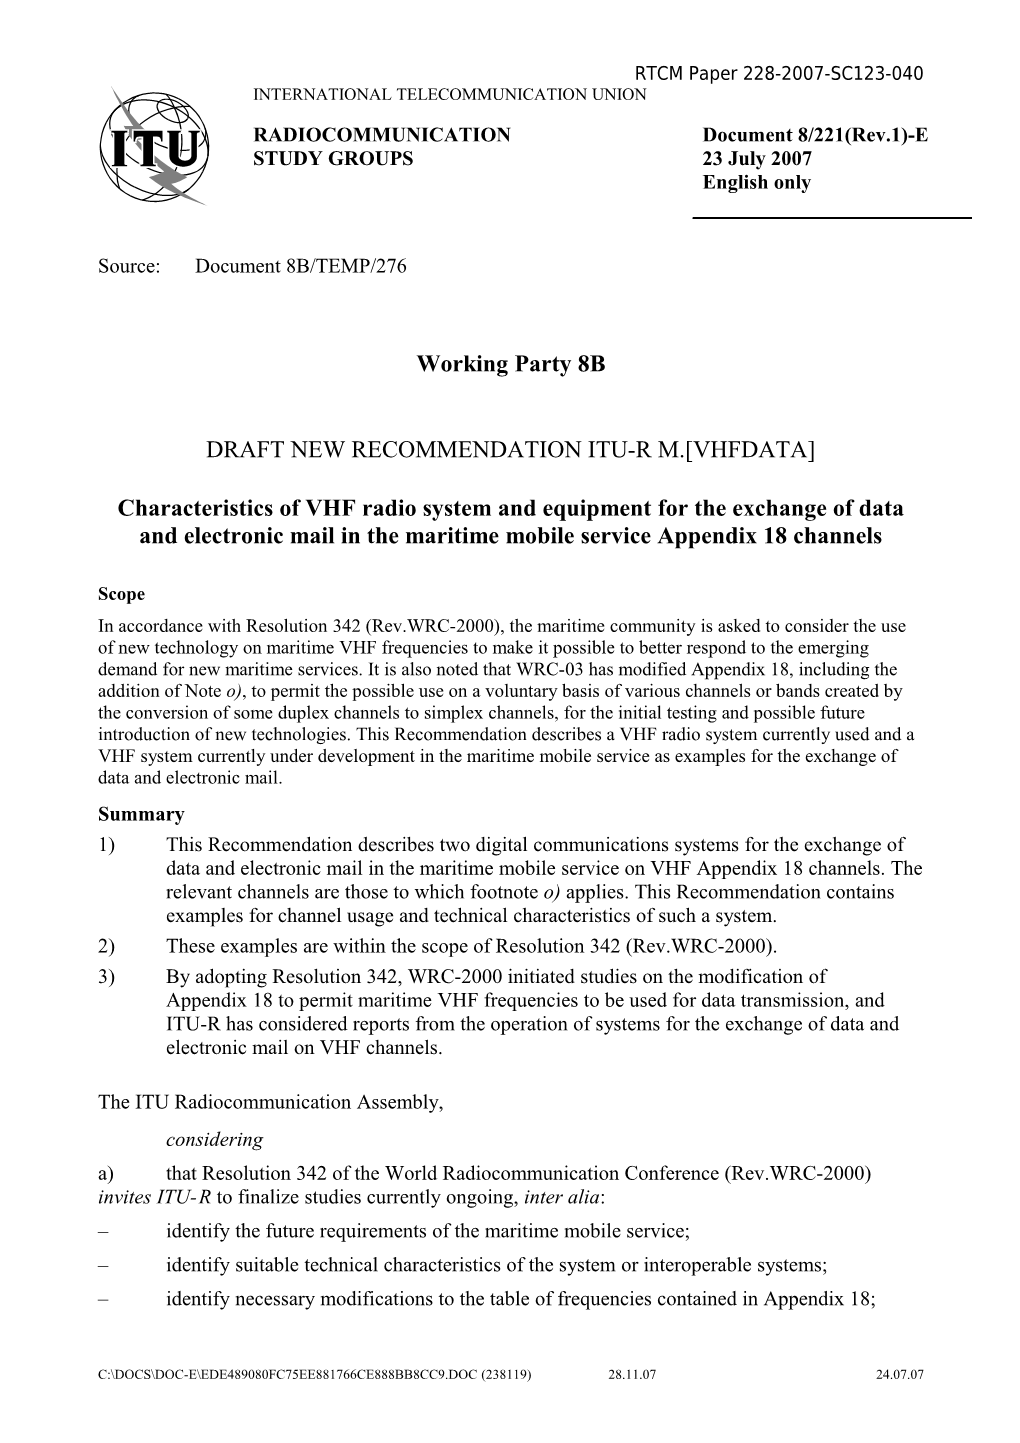 Draft New Recommendation ITU-R M. VHFDATA